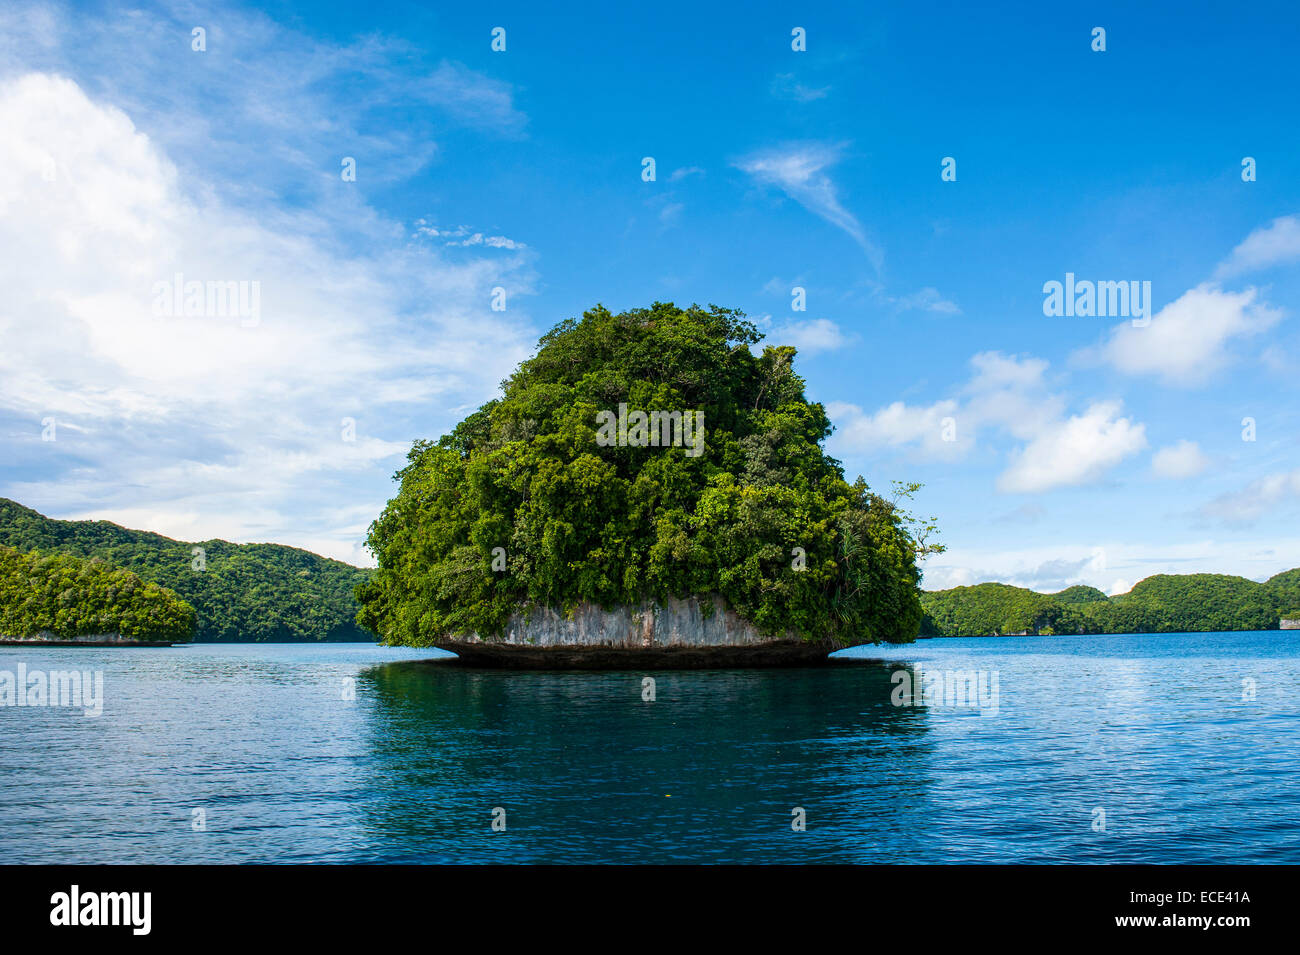 Islote, Islas Rocosas, Palau, Micronesia Foto de stock